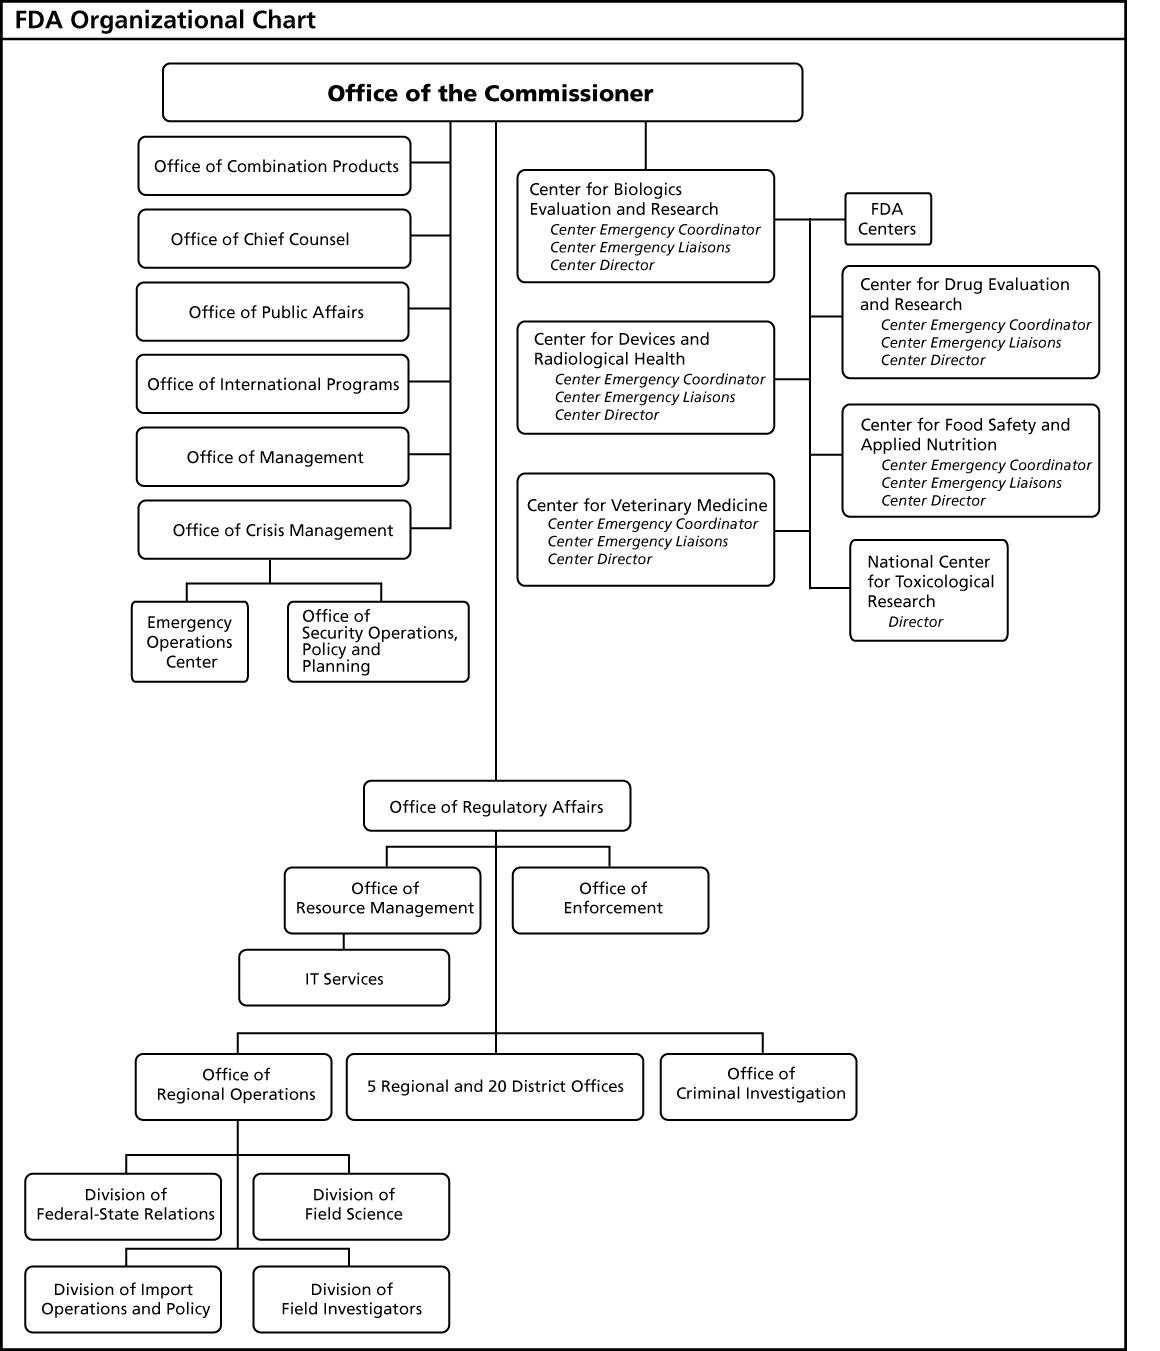 Image of FDA Organizational Chart